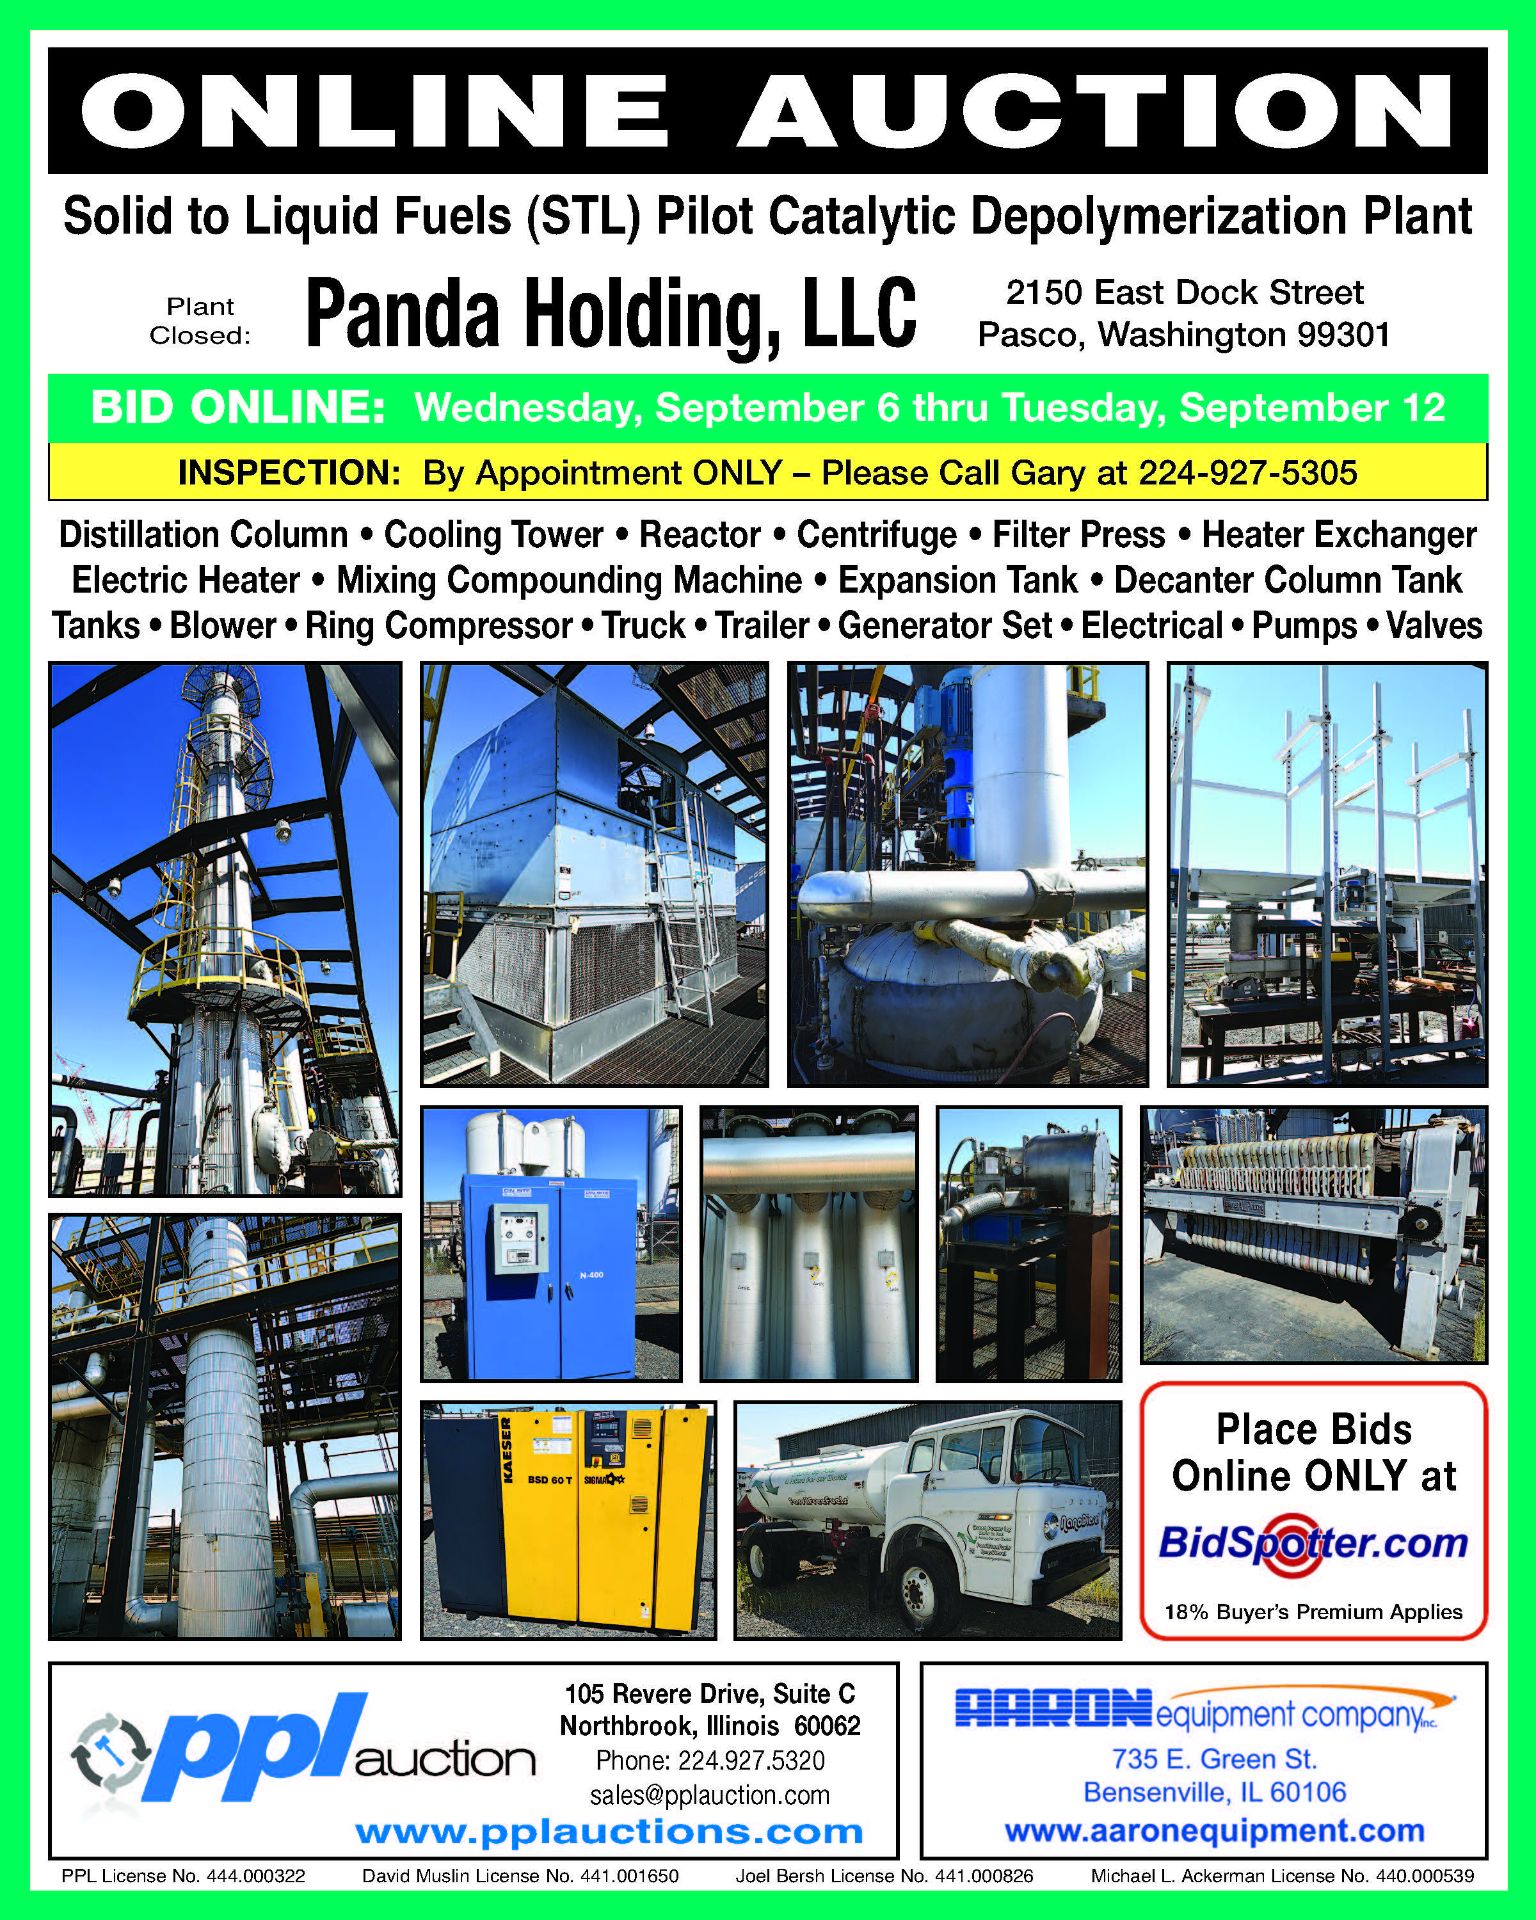 Panda Holding, LLC - Solid to Liquid Fuels (STL) Pilot Catalytic Depolymerization Plant